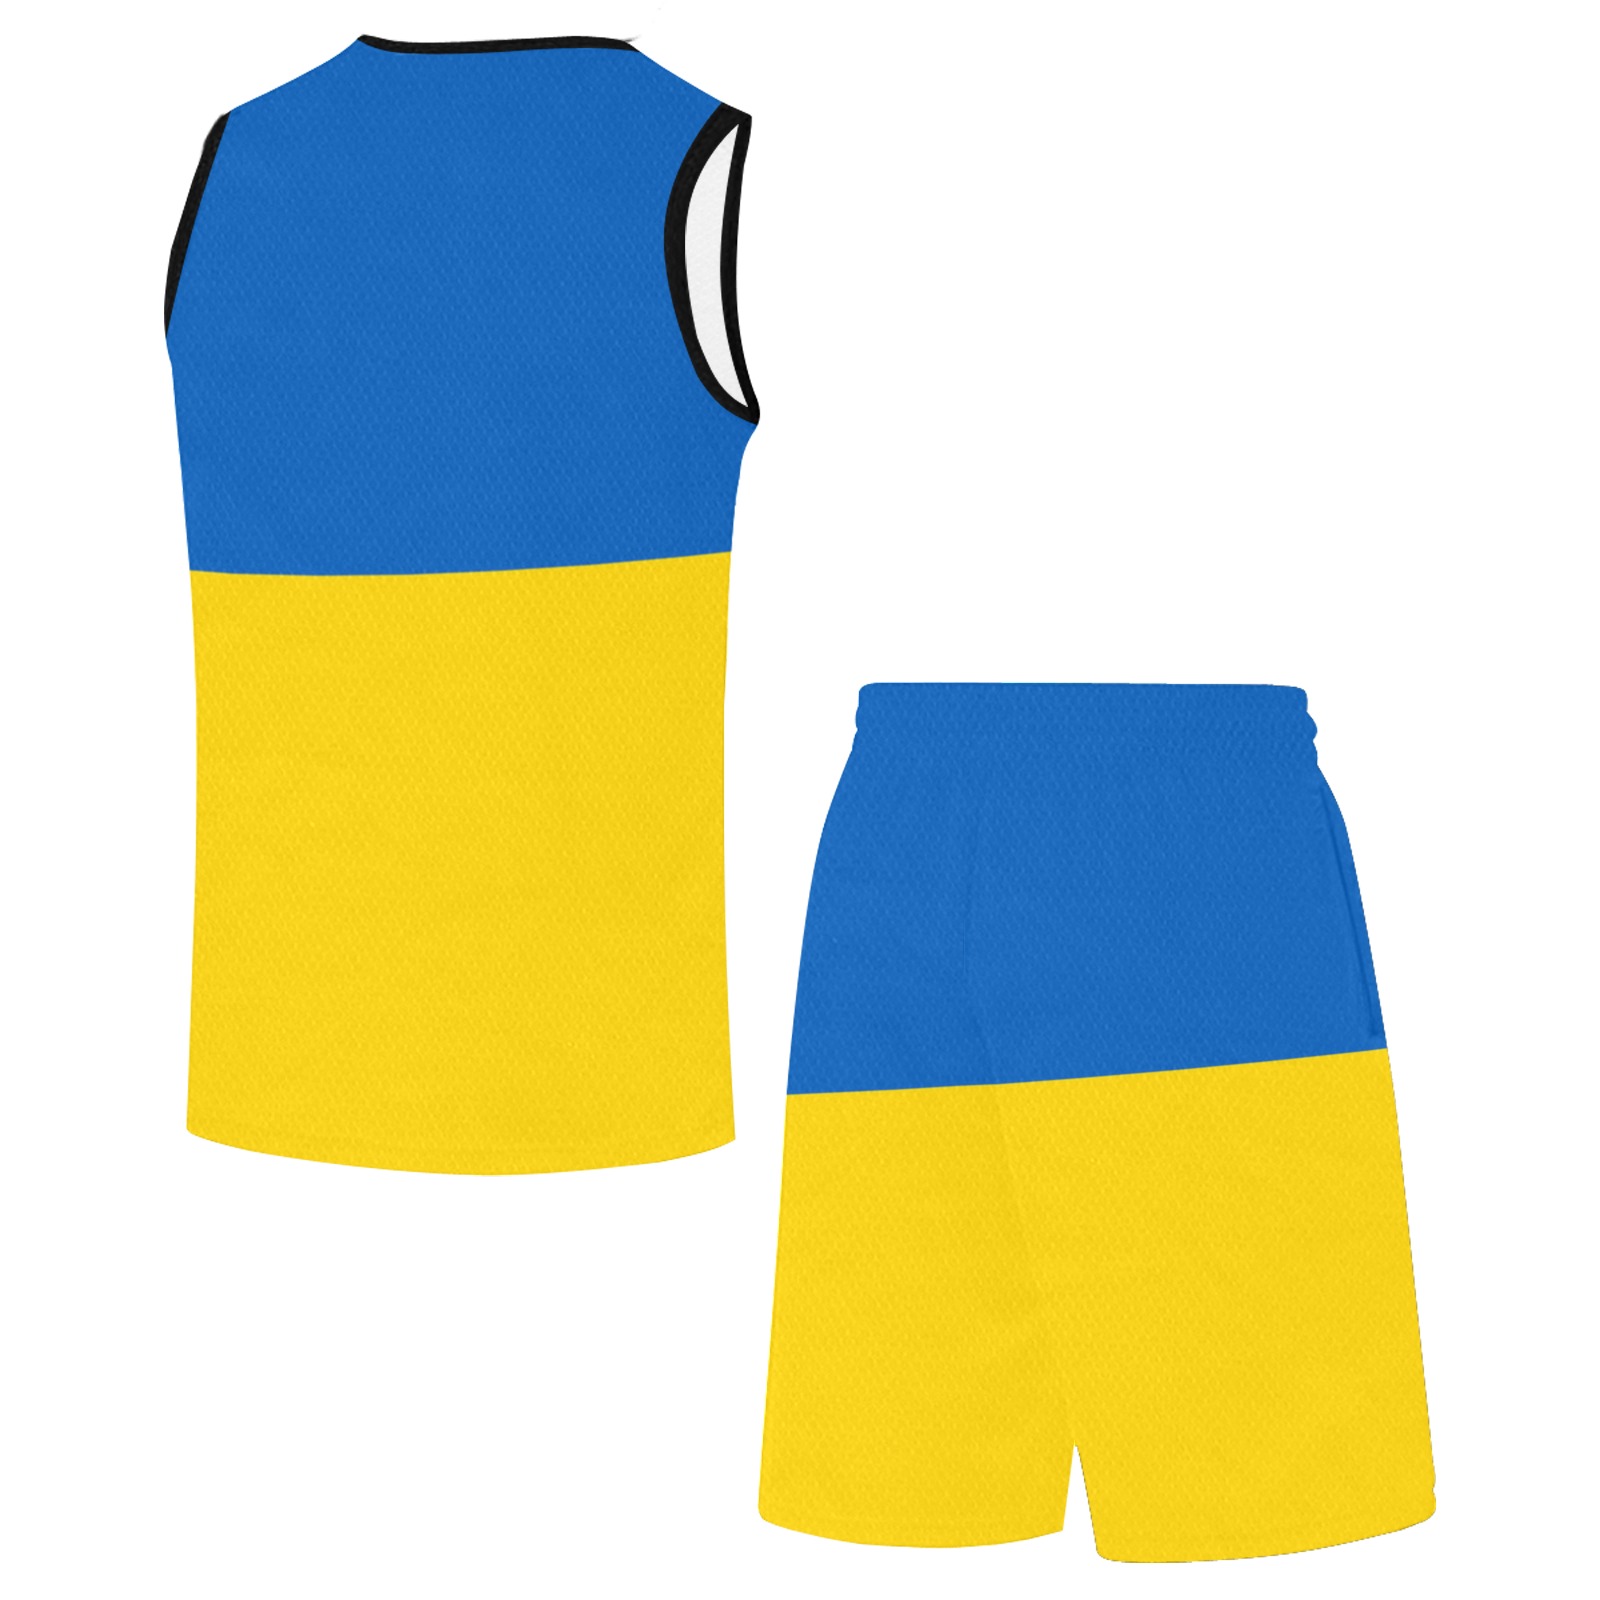 UKRAINE Basketball Uniform with Pocket